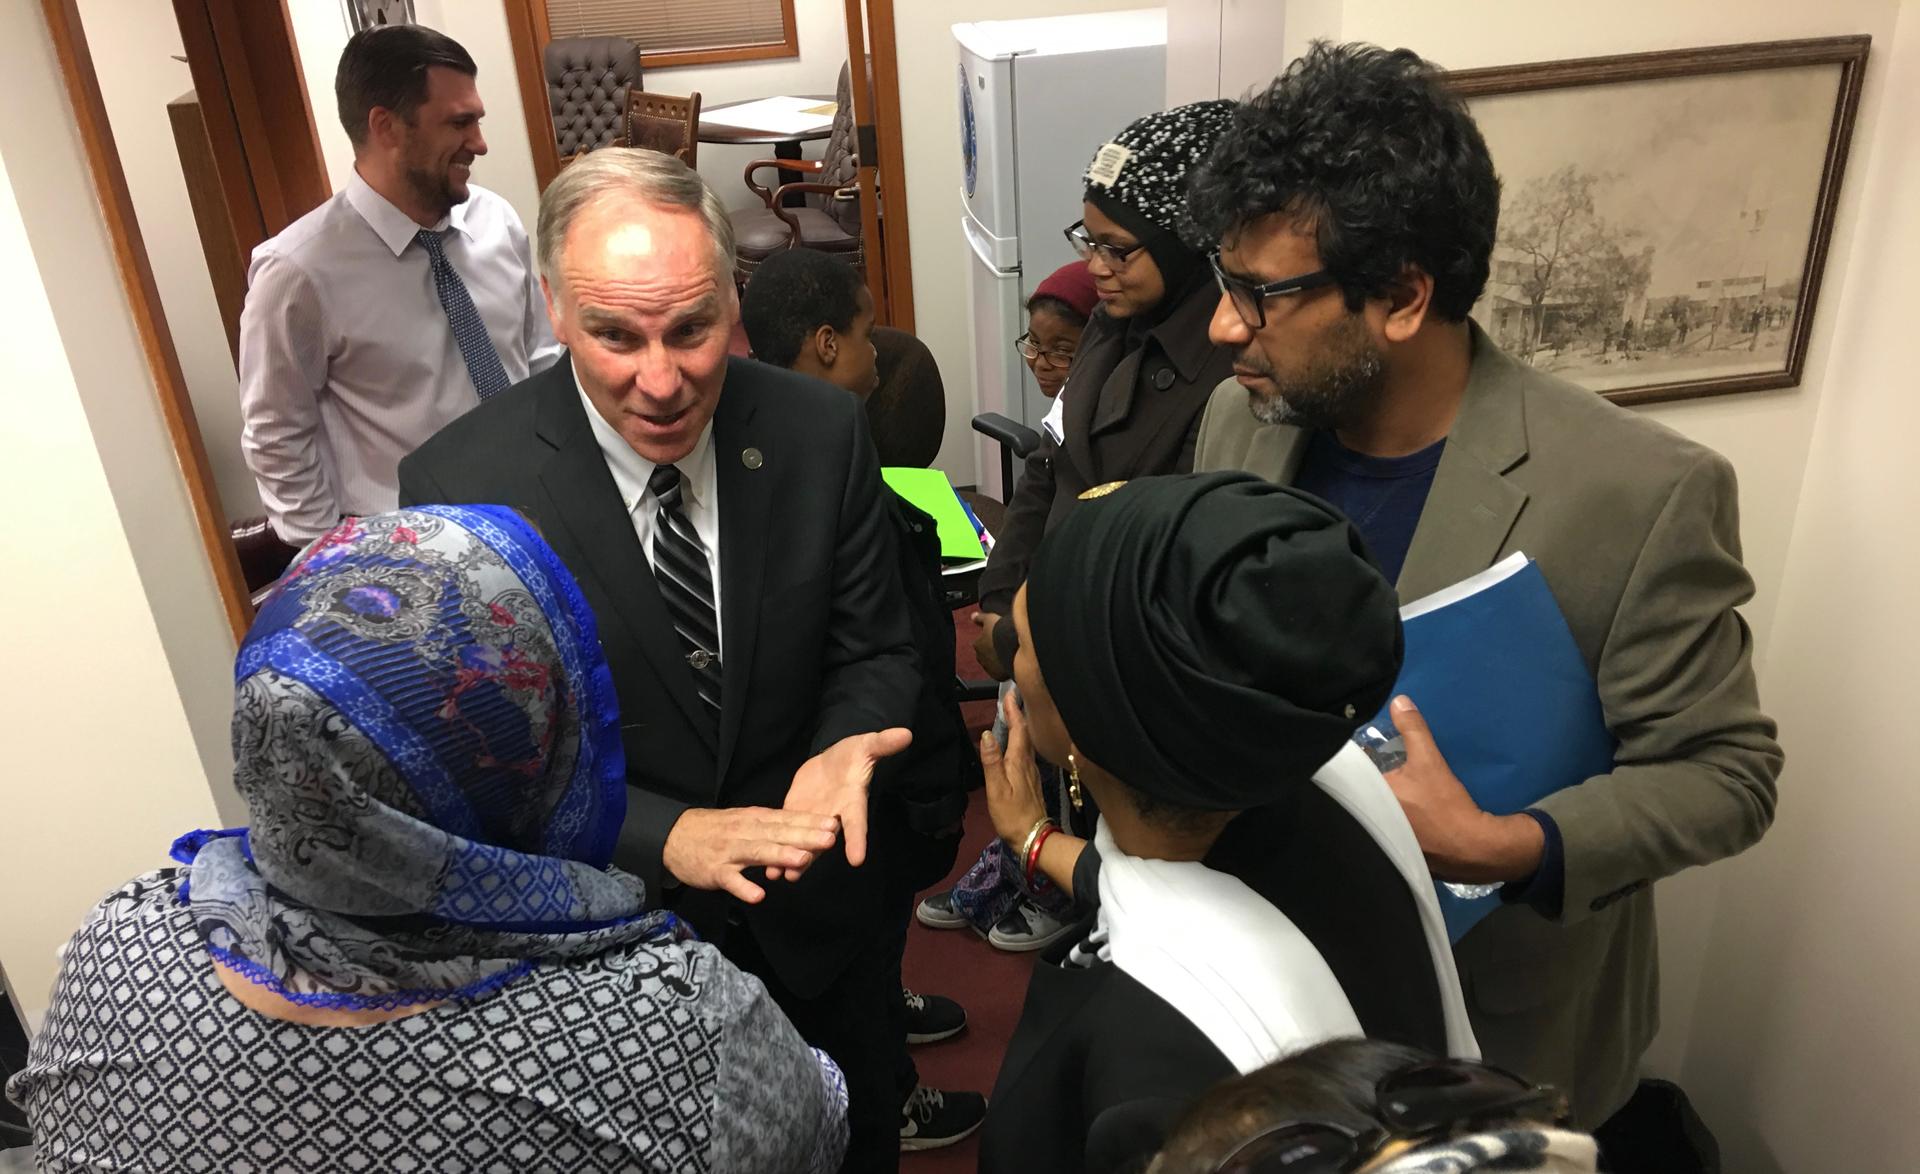 GOP state representative Kyle Biedermann held a short impromptu meeitng with Muslim Texans who took part in 